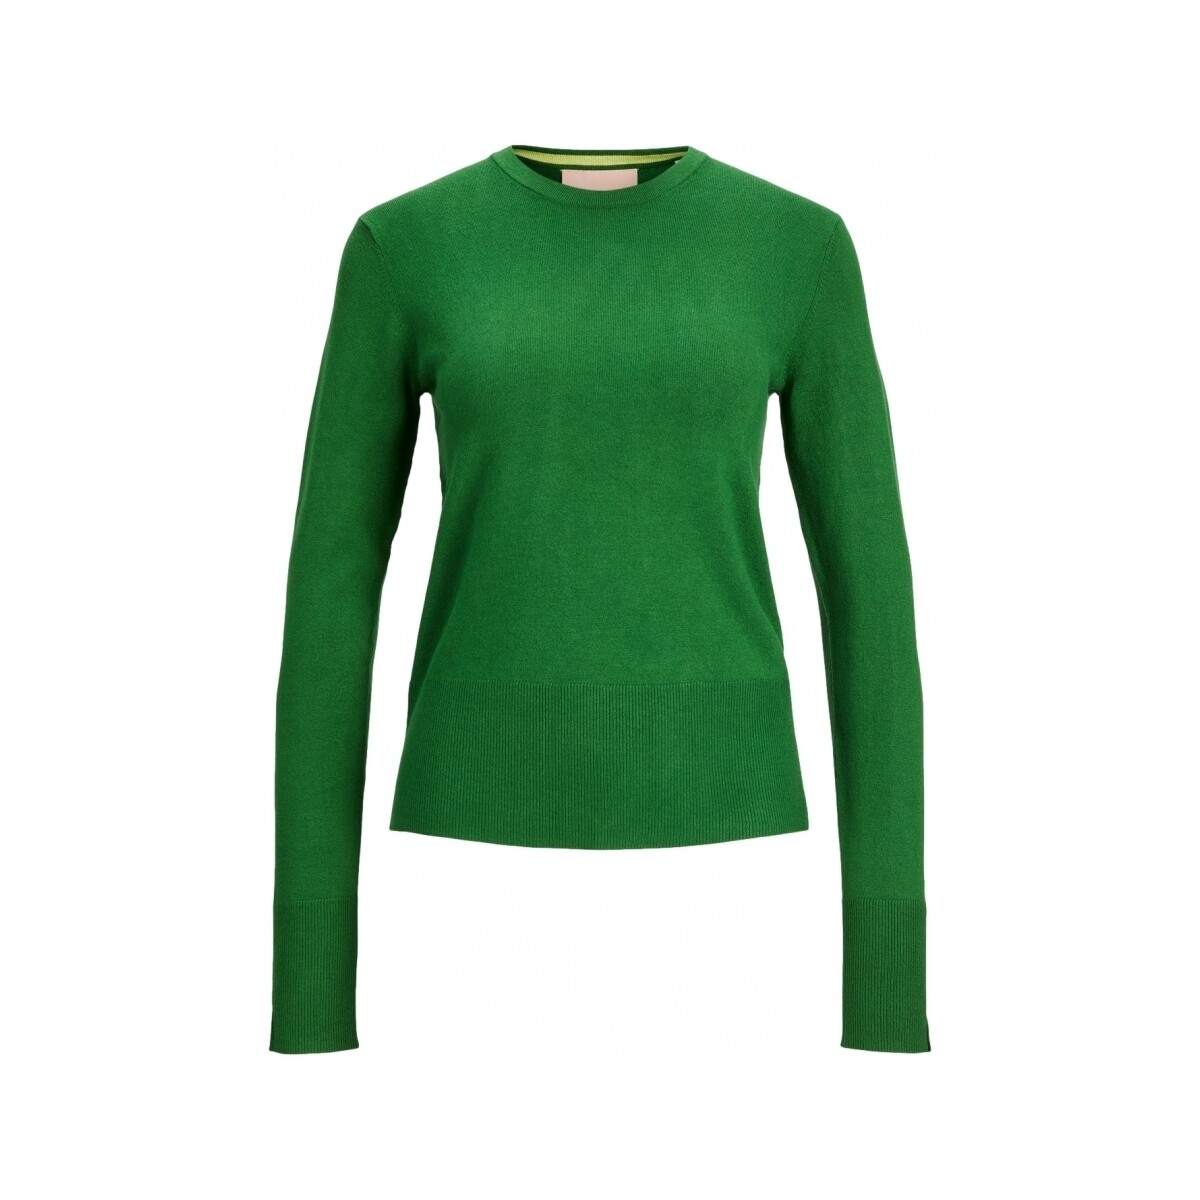 Textil Ženy Svetry Jjxx Noos Knit Lara L/S - Formal Green Zelená